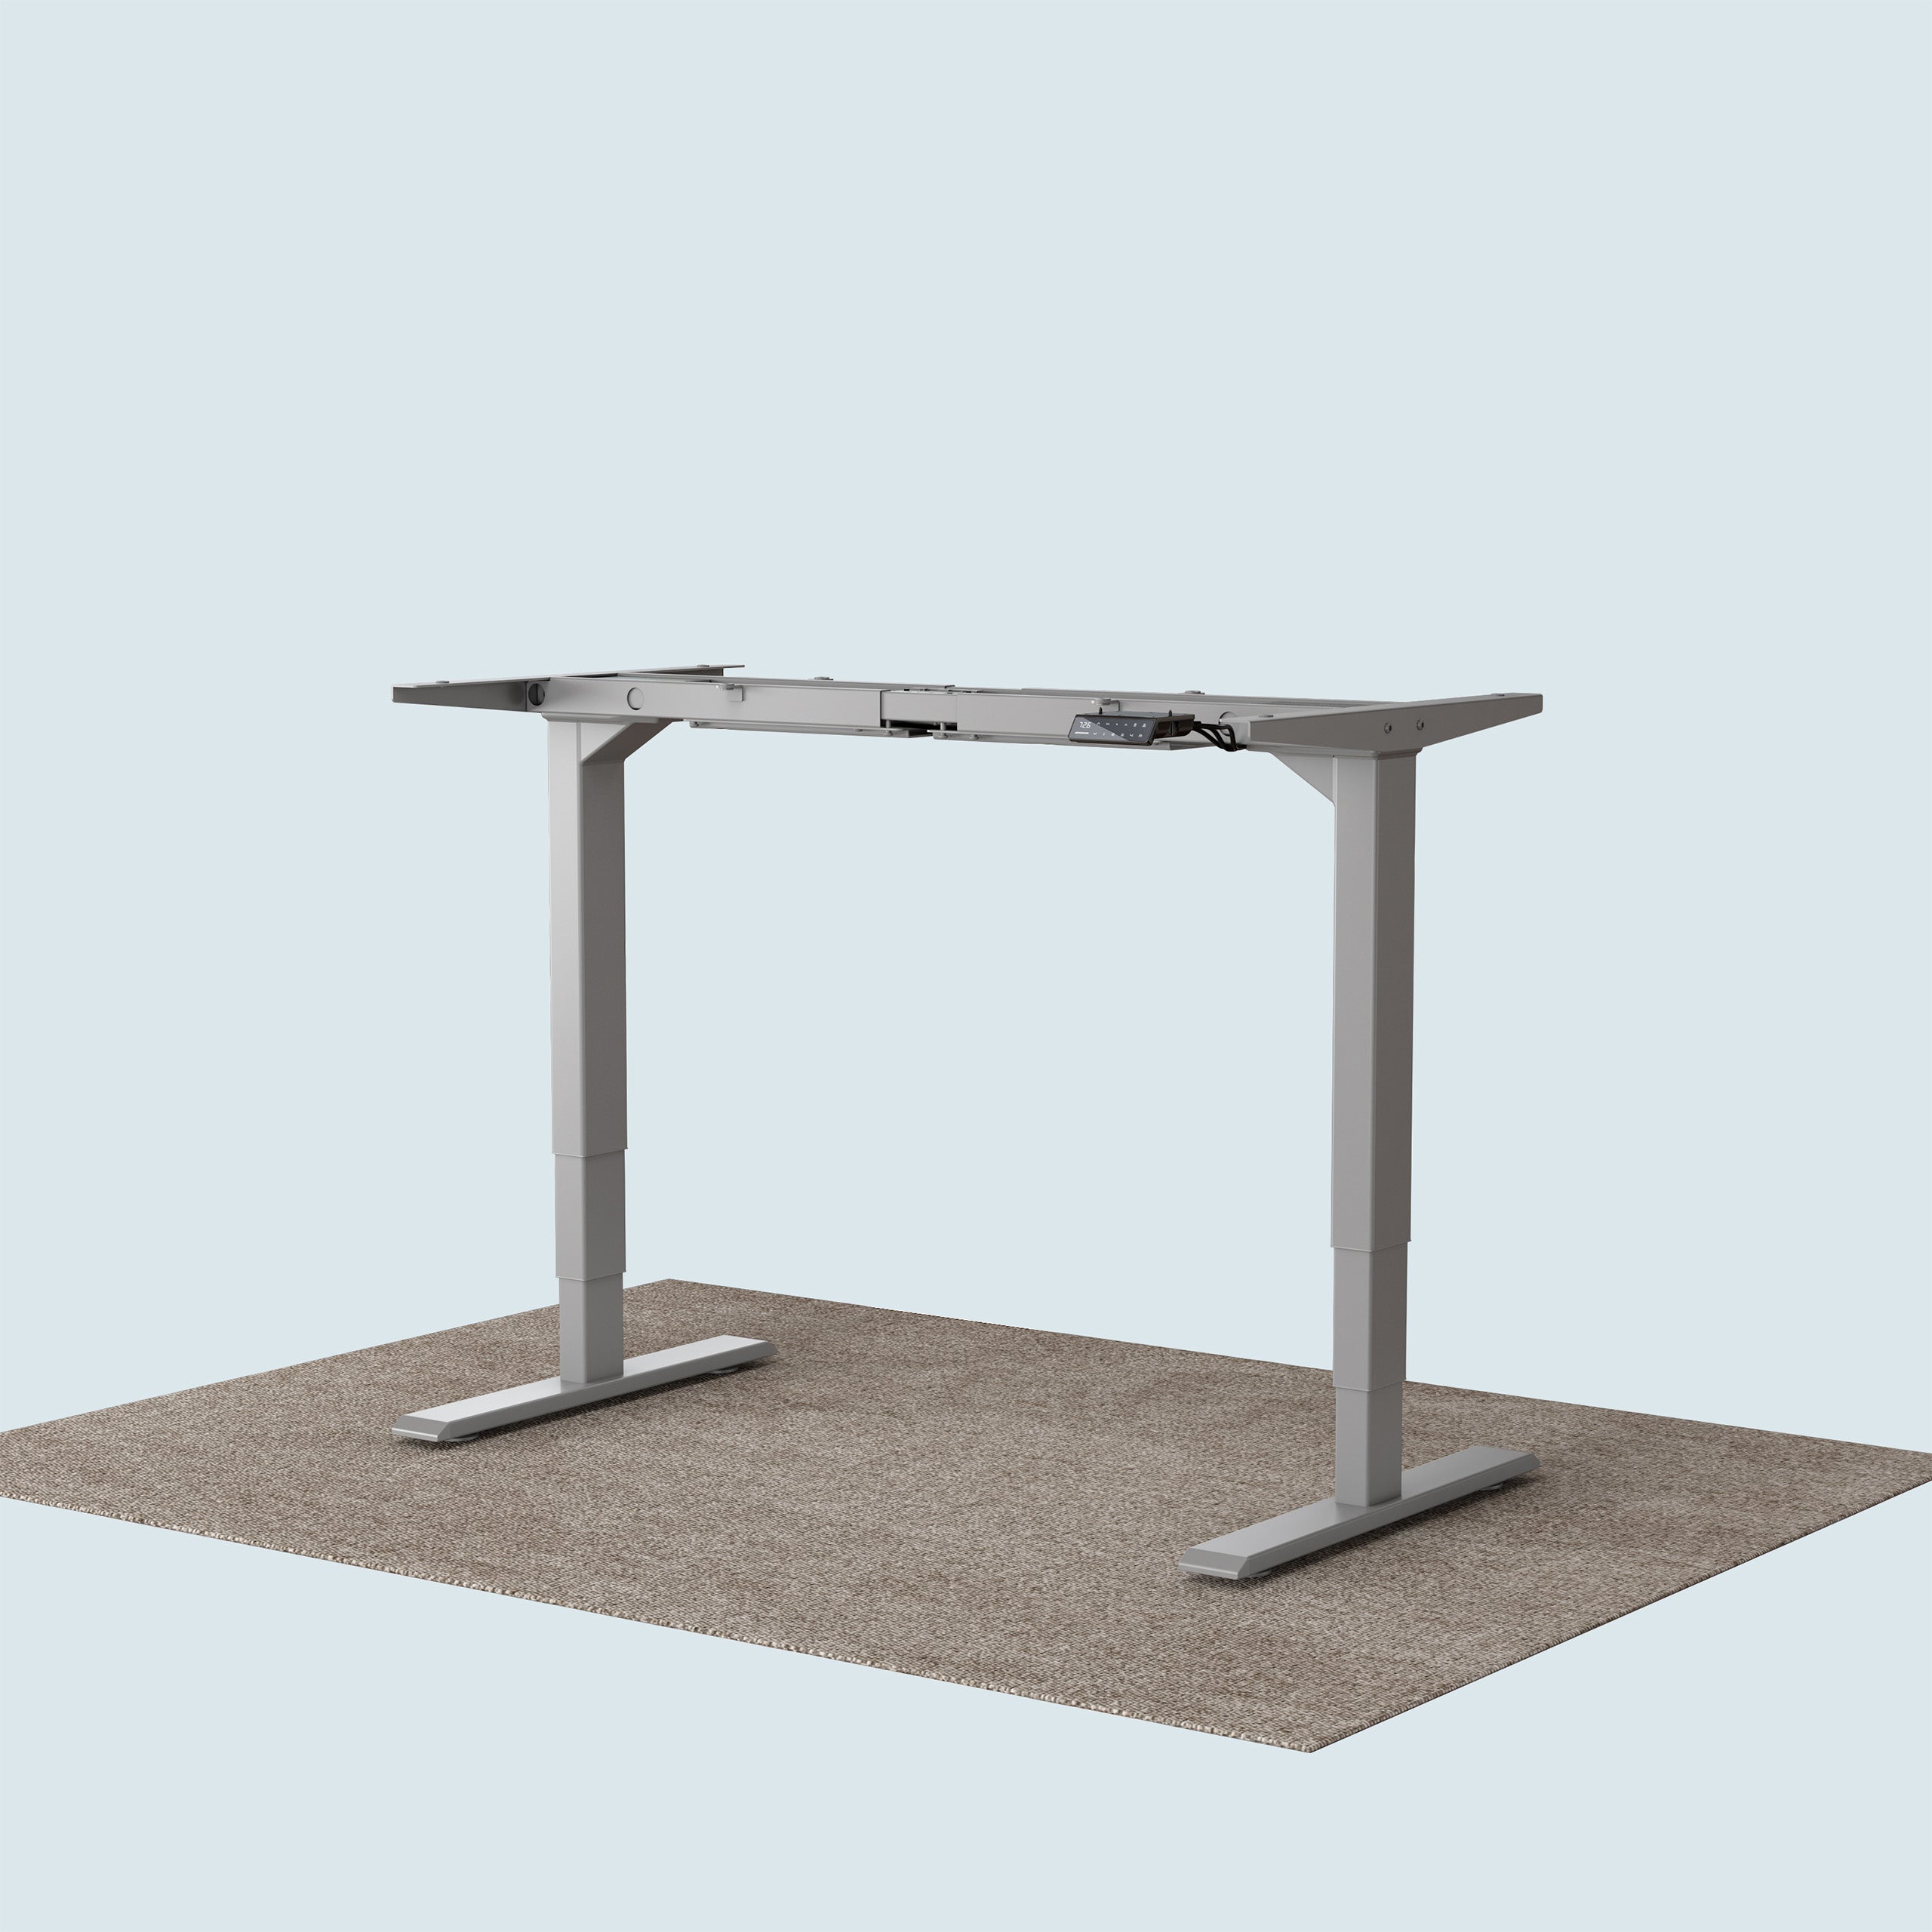 Maidesite T2 Pro Plus marco de escritorio eléctrico gris, patas telescópicas regulables en altura de 62 a 125 cm